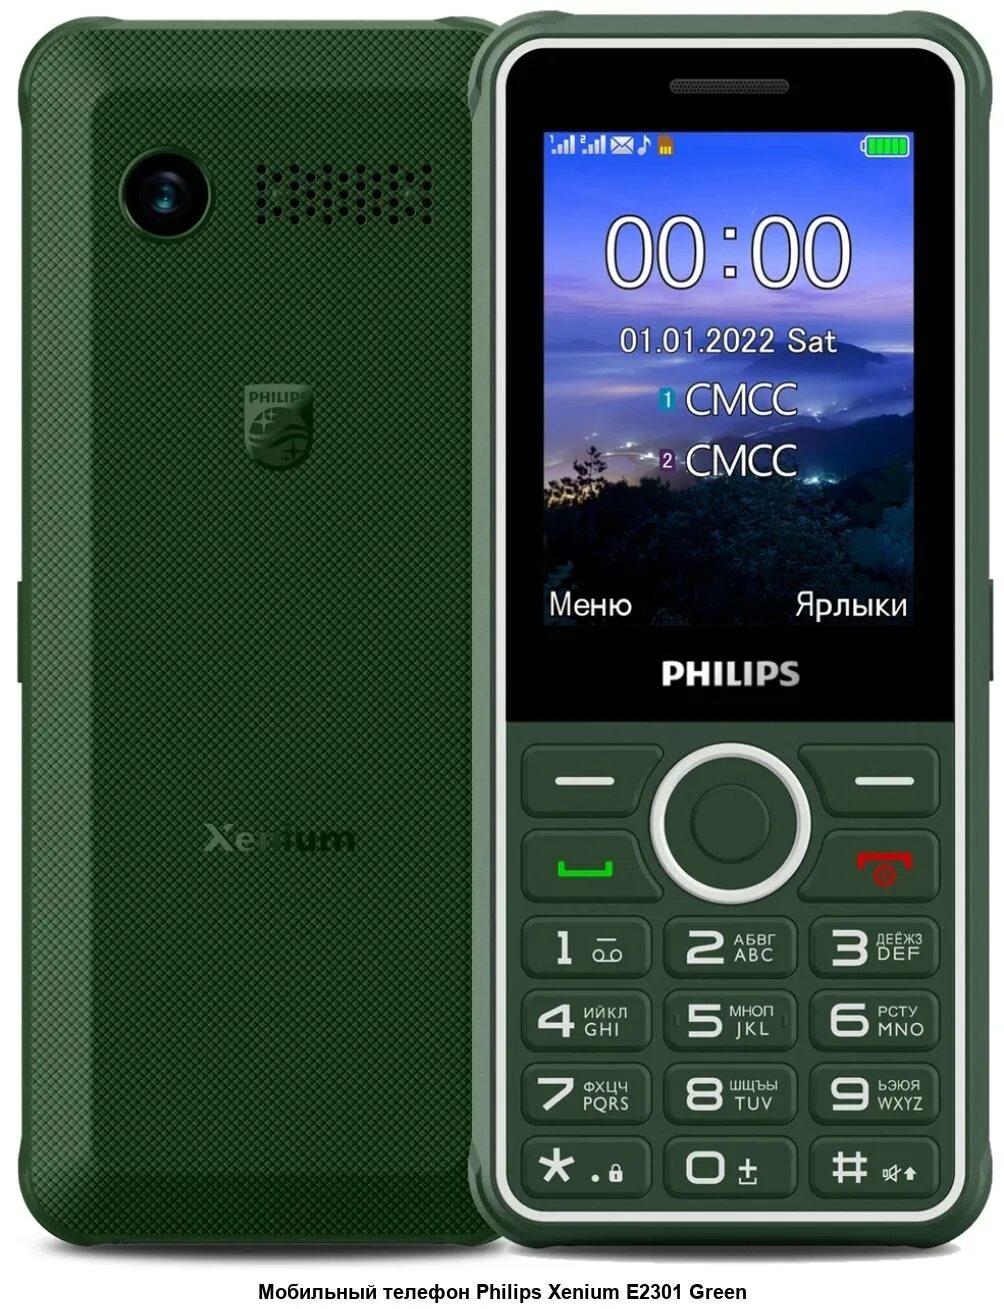 Philips Xenium e2301. Philips Xenium 2301. Филлипс е 2301. E2301 Philips Green. Филипс 2301